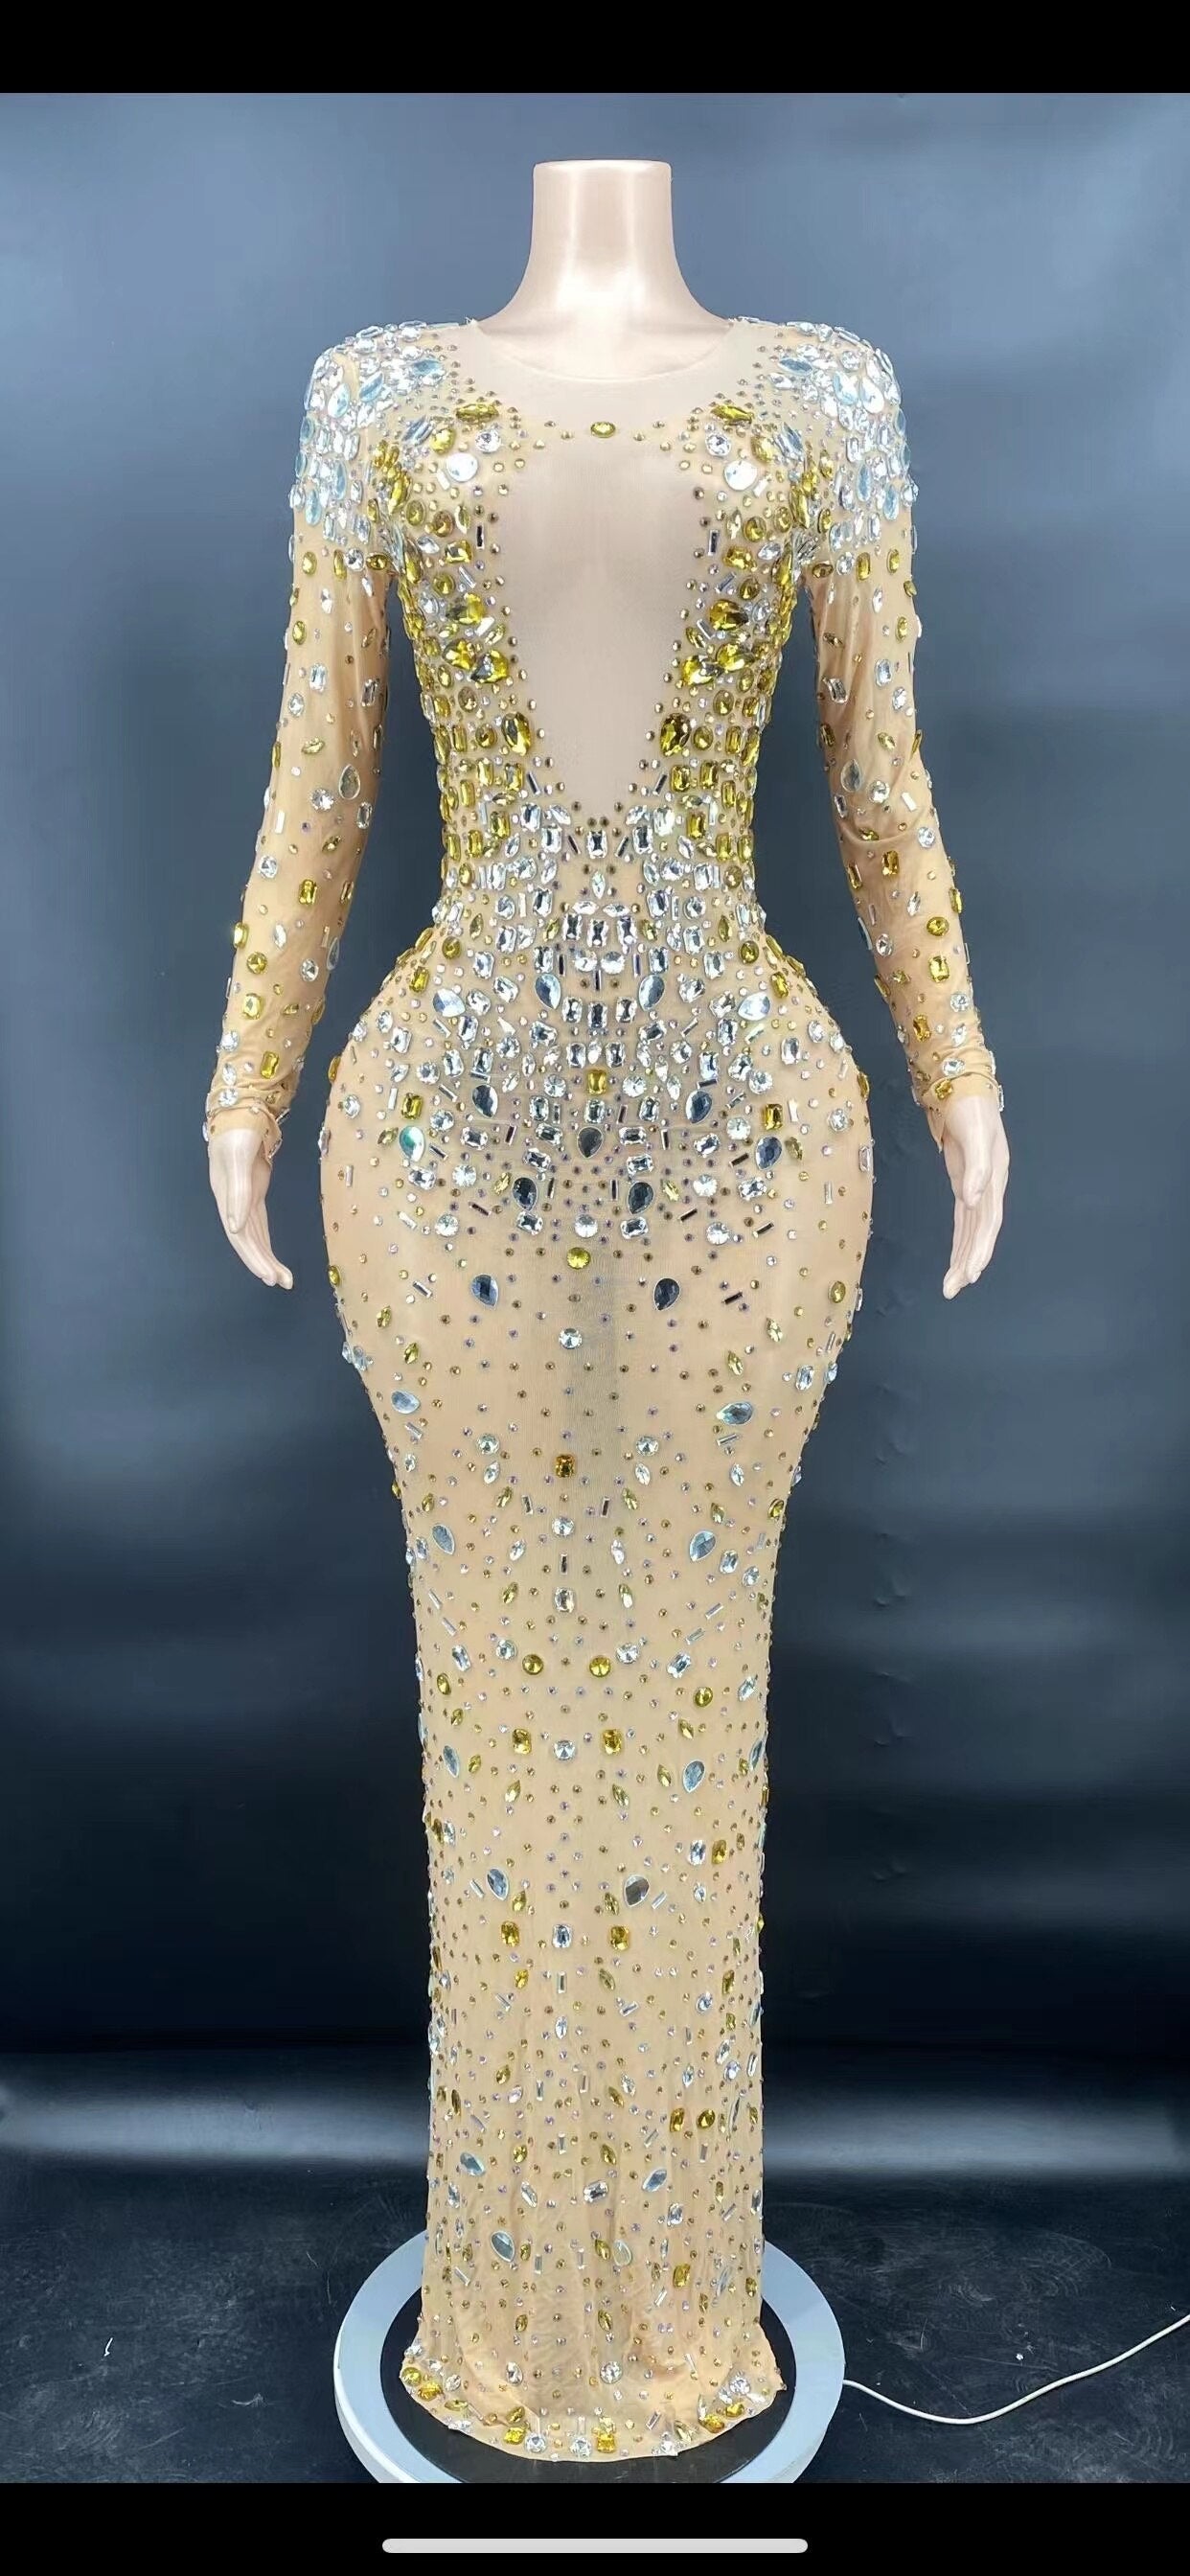 2022 Design Gold Big Crystals Transparent Dress Evening Birthday Celebrate Outfit Costume Dancer Flashing Dress